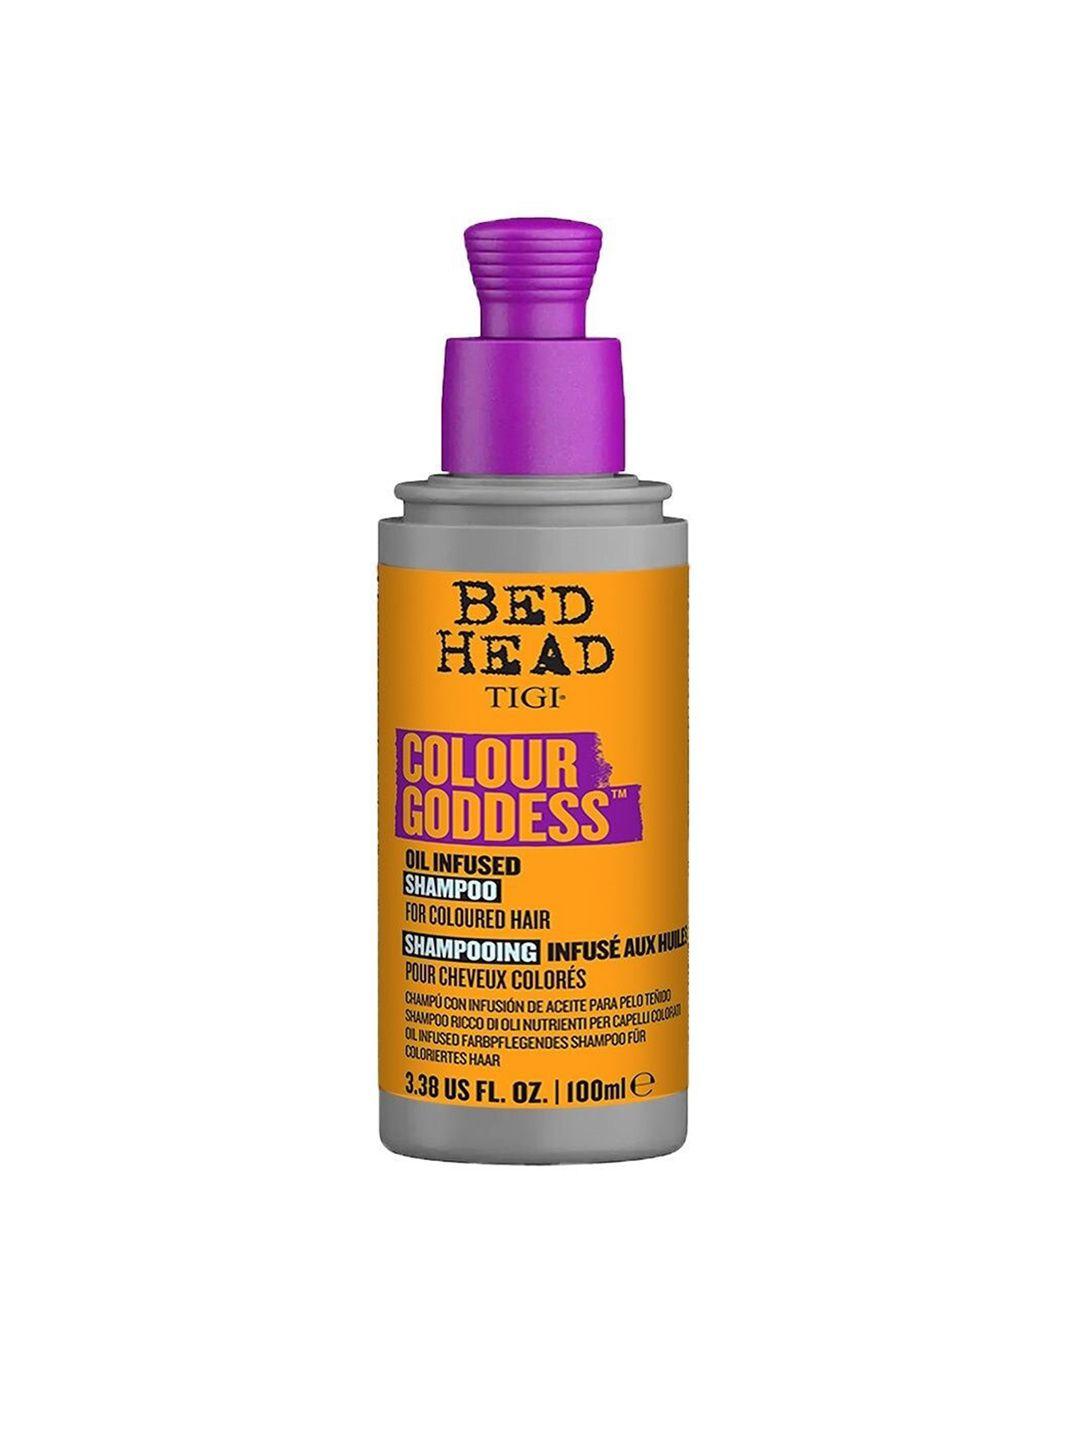 tigi bed head colour goodness oil infused shampoo for coloured hair - 100ml